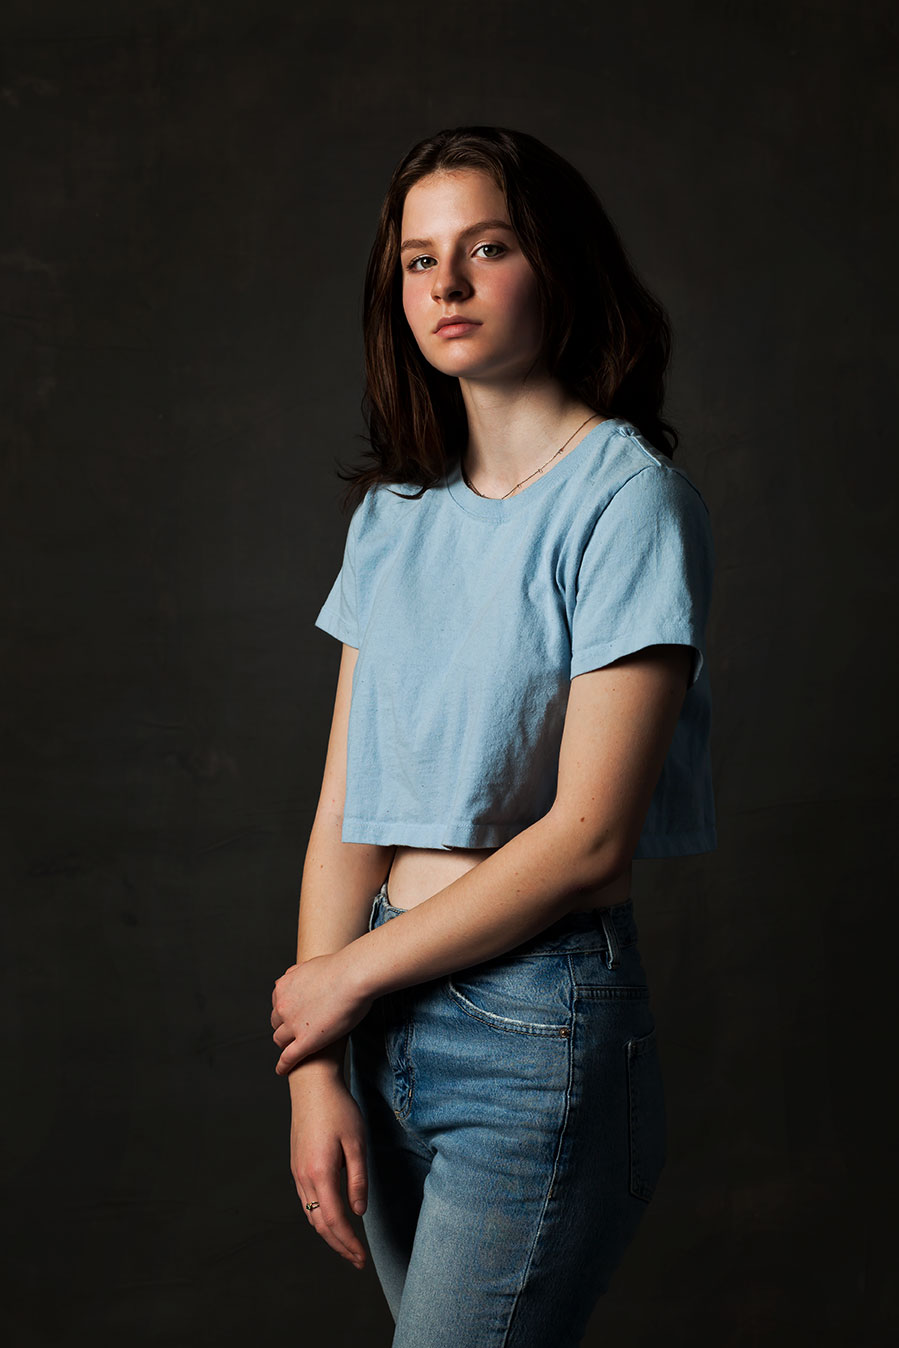 Portrait of a teenager by Marili Clark Photographer.